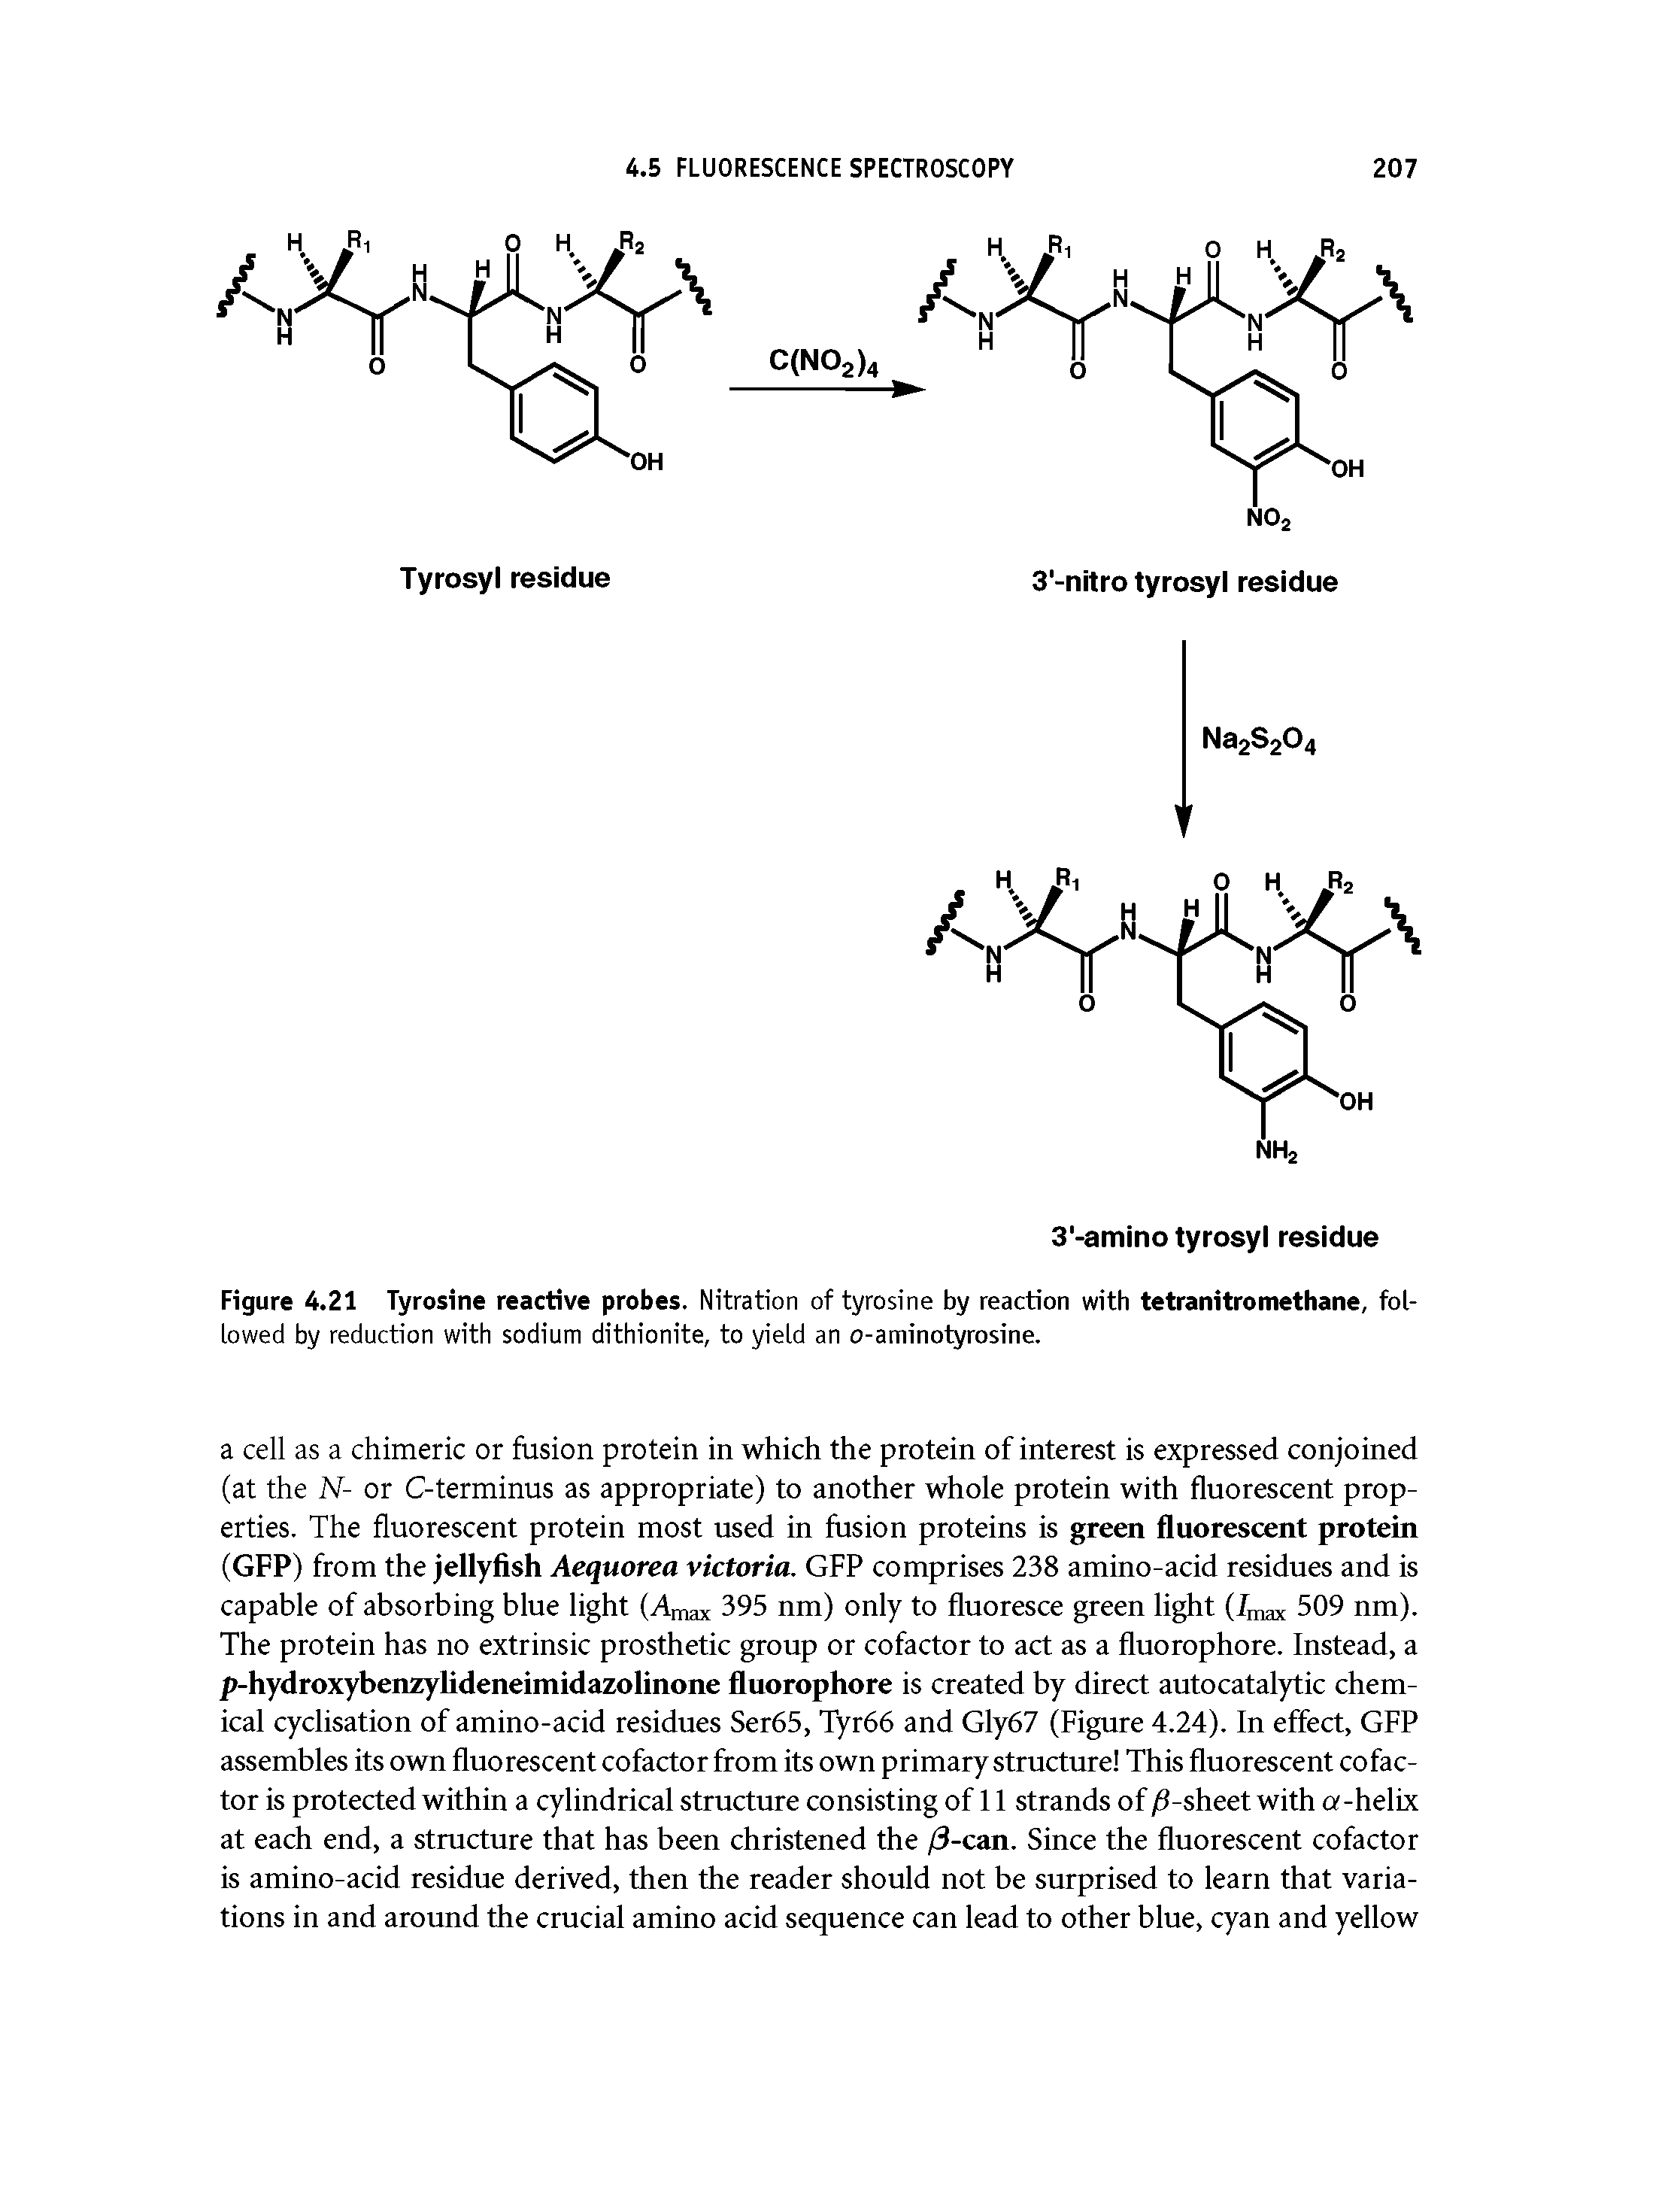 Figure 4.21 Tyrosine reactive probes. Nitration of tyrosine by reaction with tetranitromethane, followed by reduction with sodium dithionite, to yield an o-aminotyrosine.